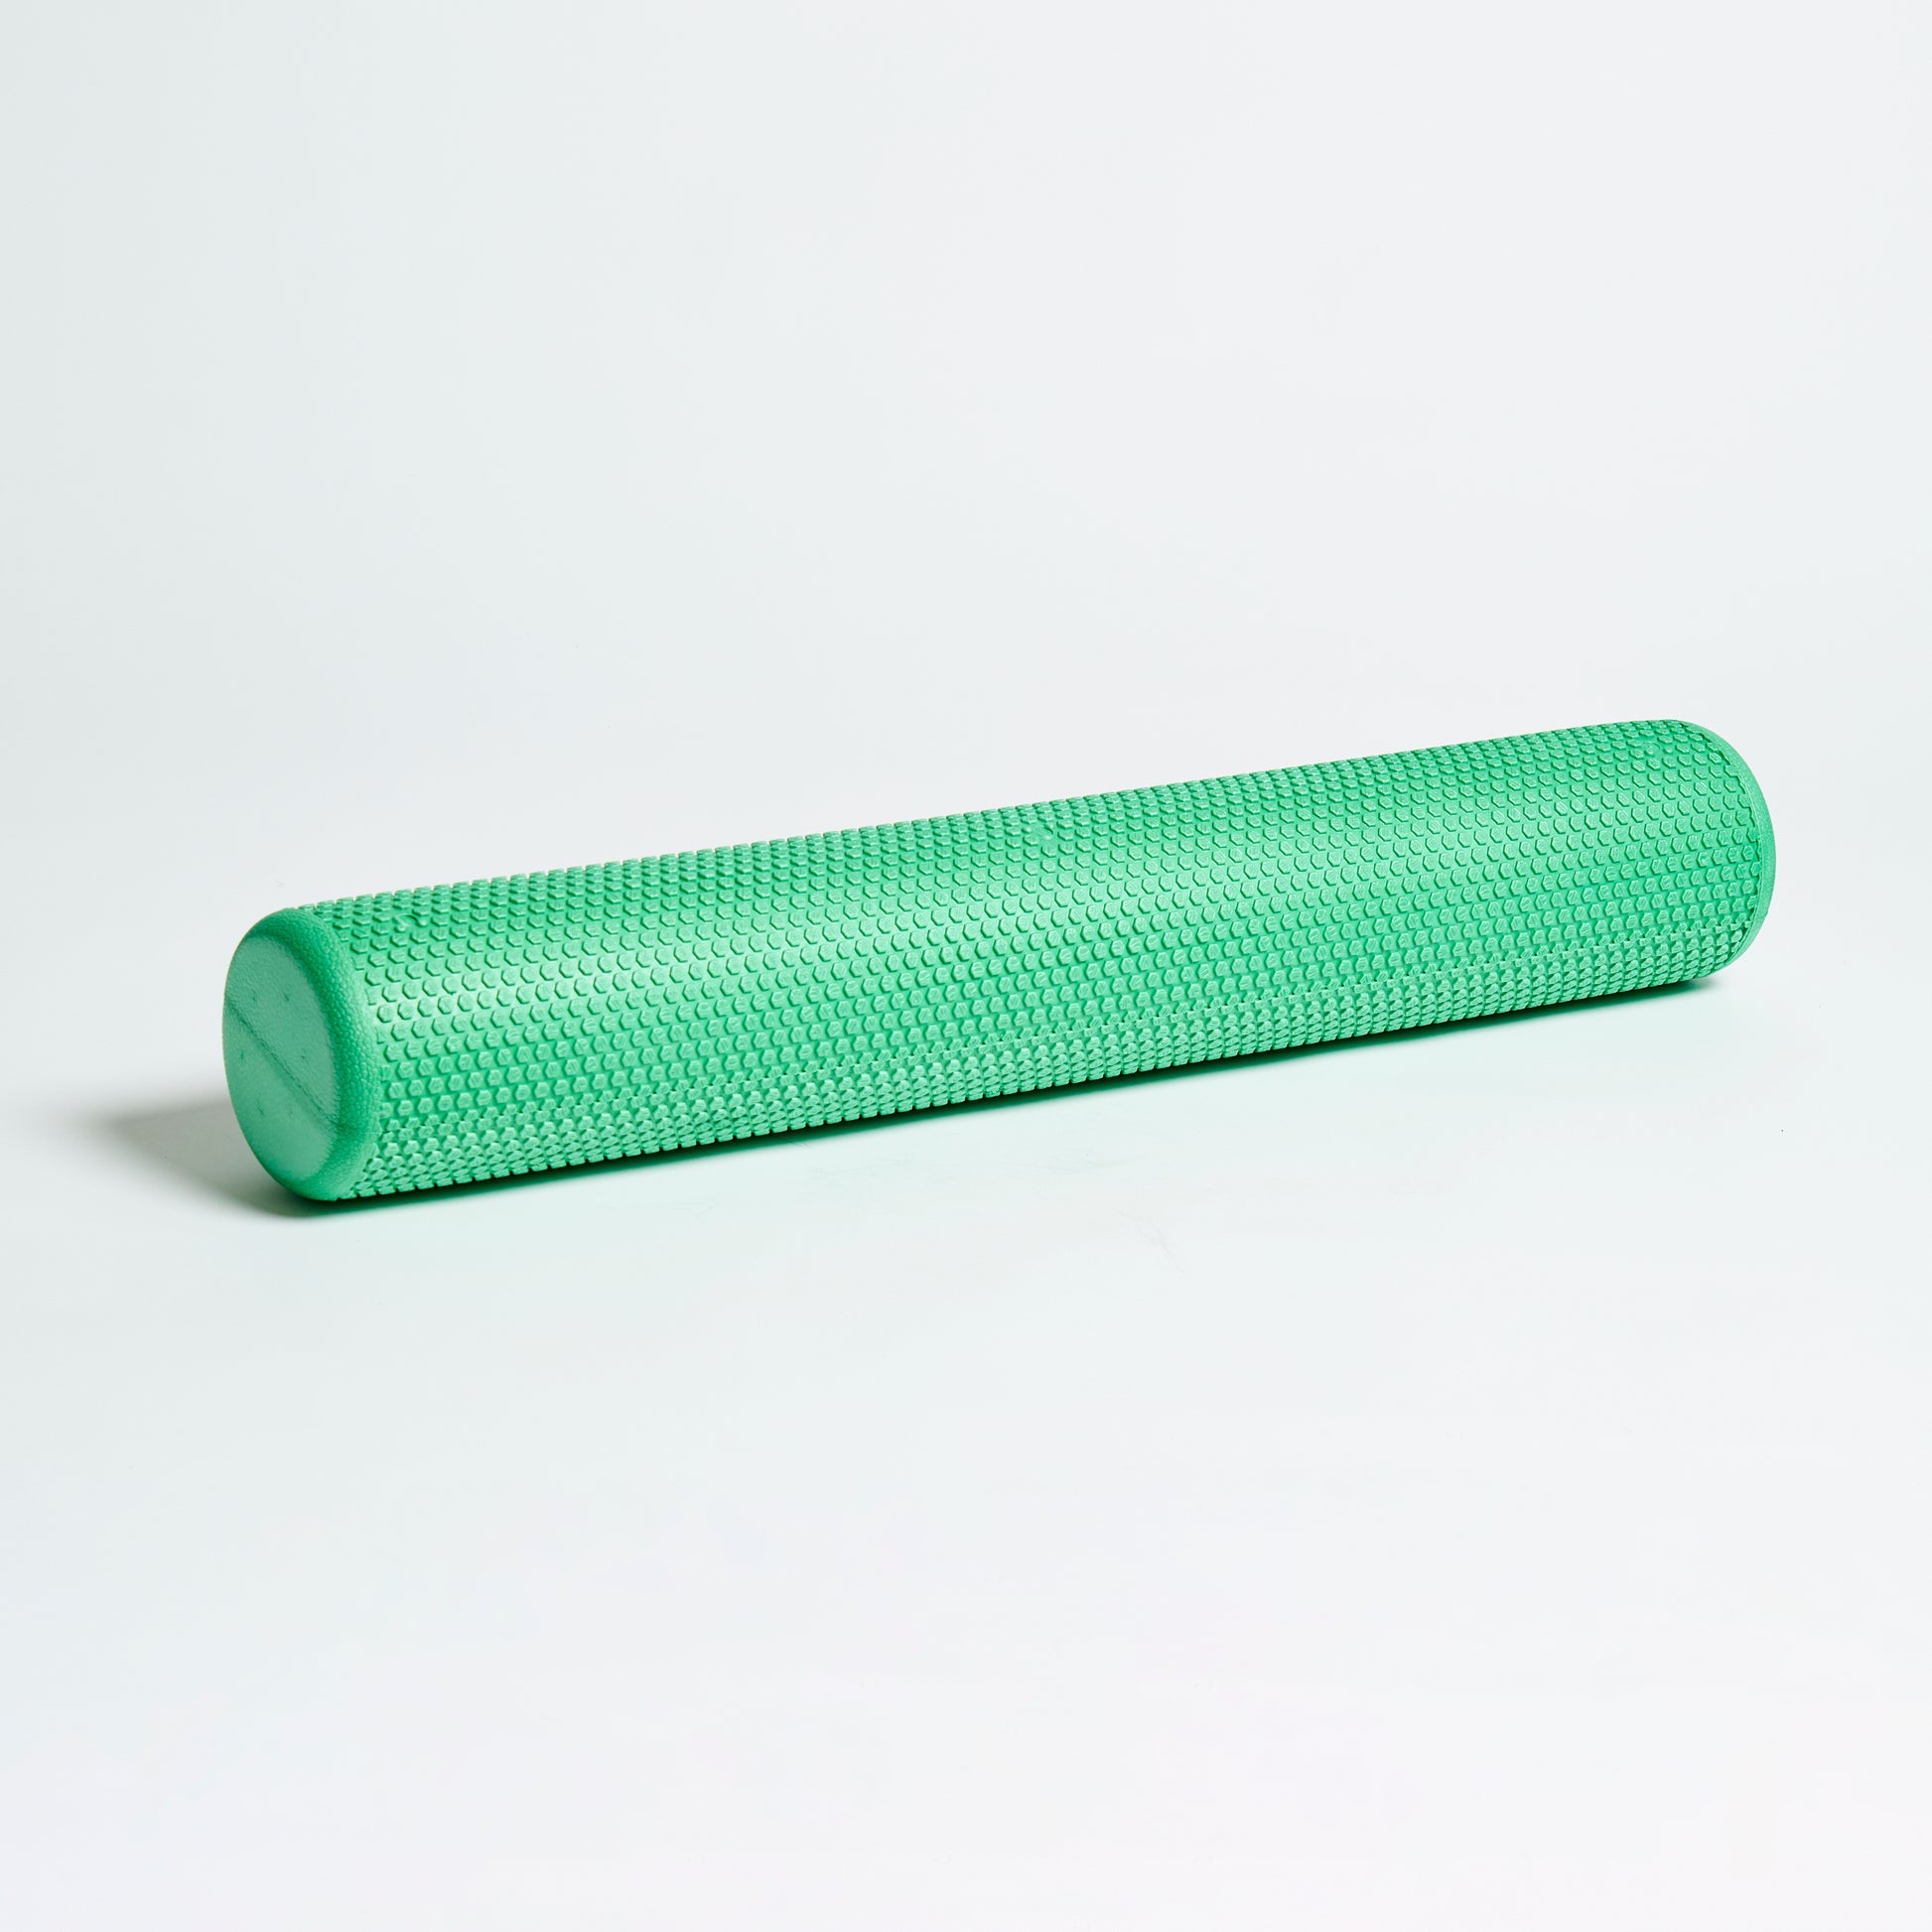 EcoWise Hexangular Texture Foam Roller – Aeromat/Ecowise